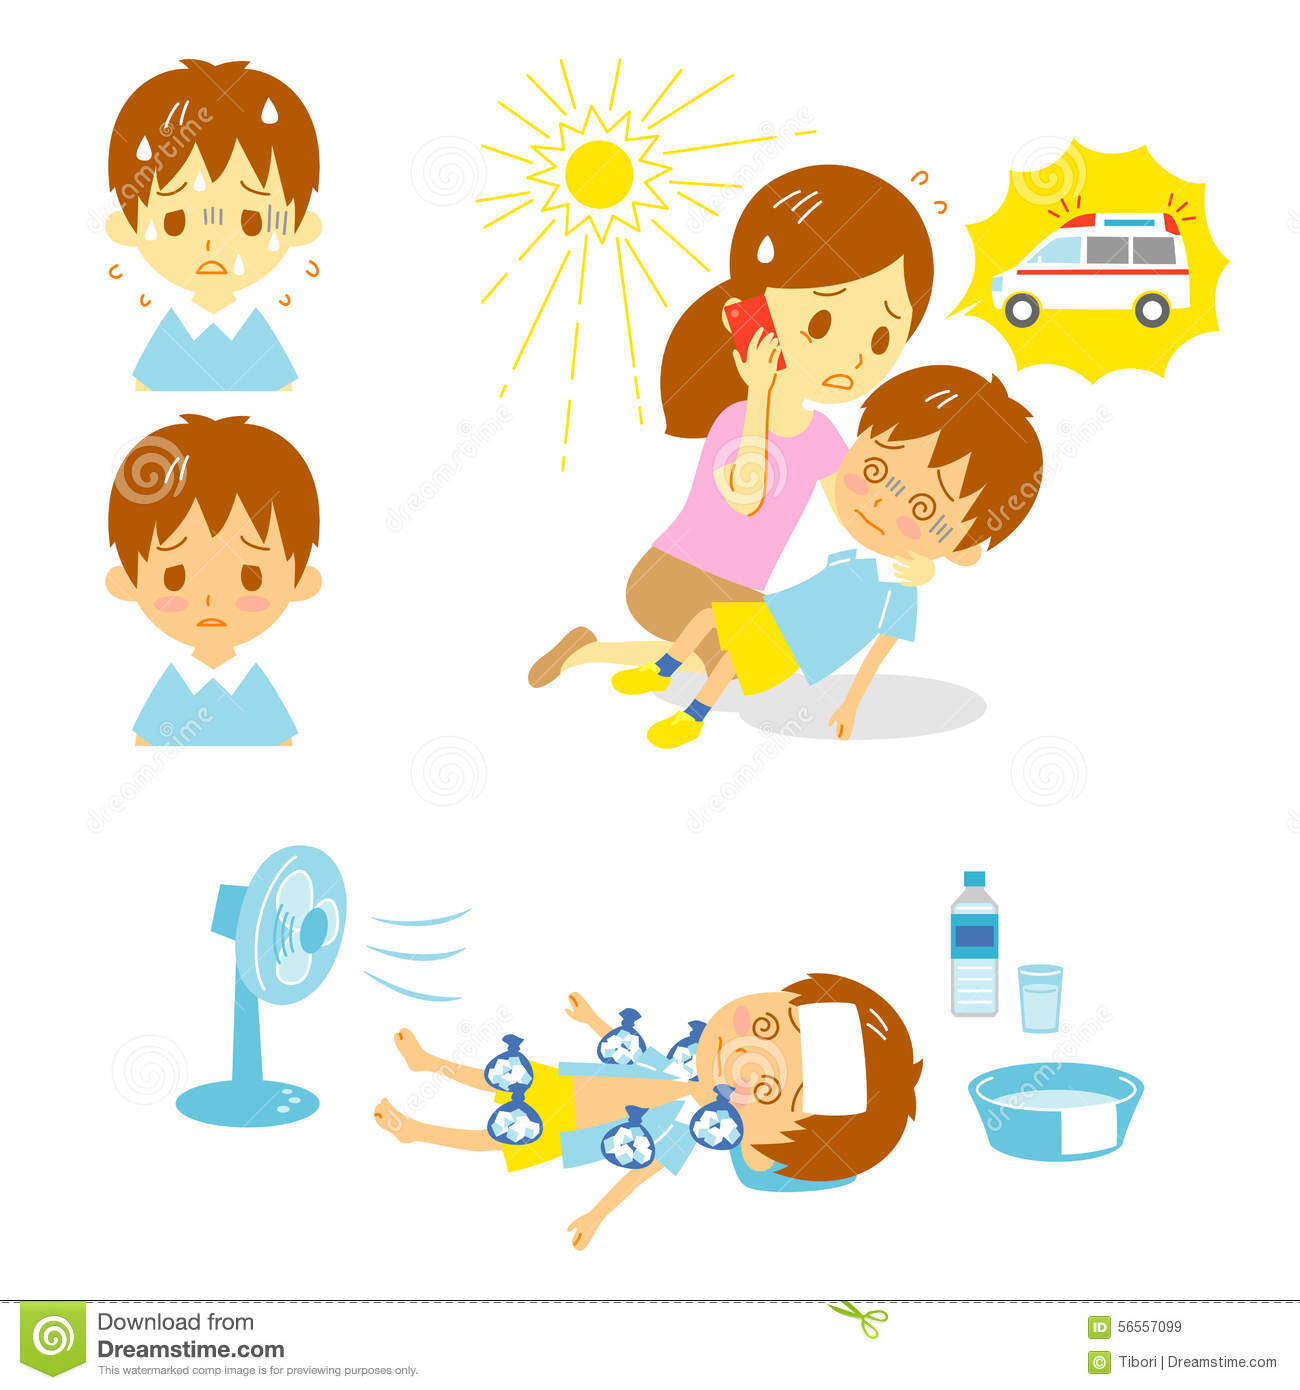 heatstroke-ambulance-first-aid-call-boy-file-56557099-3449065